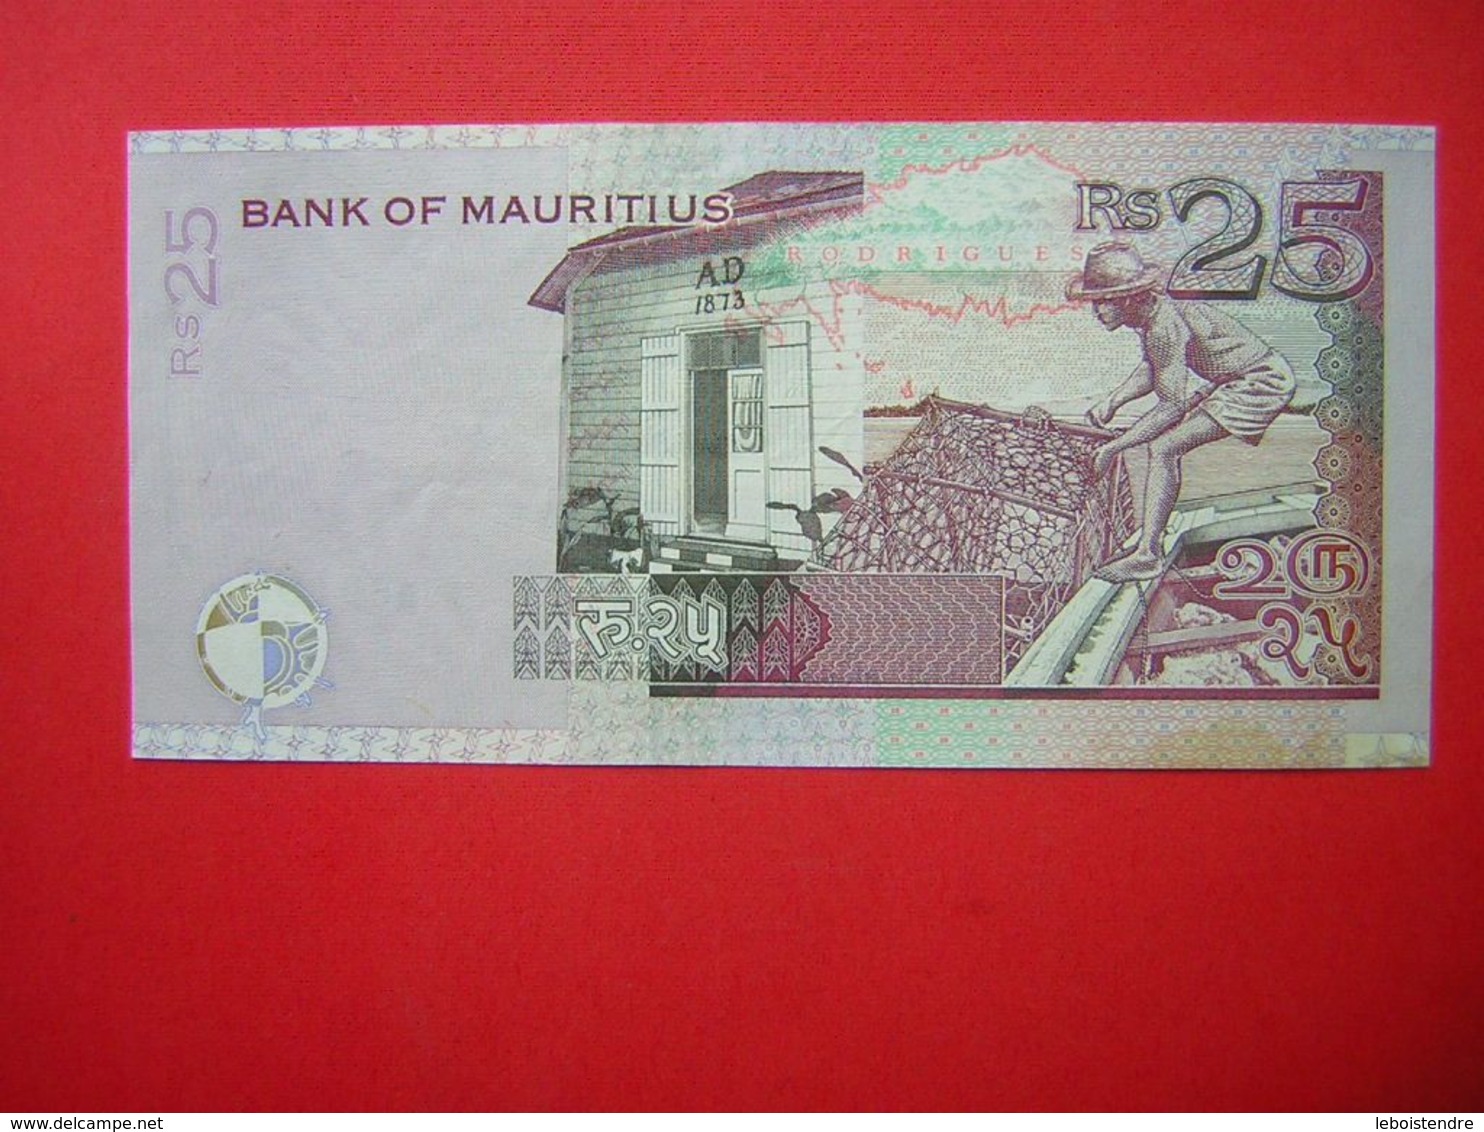 1 BILLET BANK OF MAURITIUS  RS 25  TWENTY FIVE   1999 - Mauritius